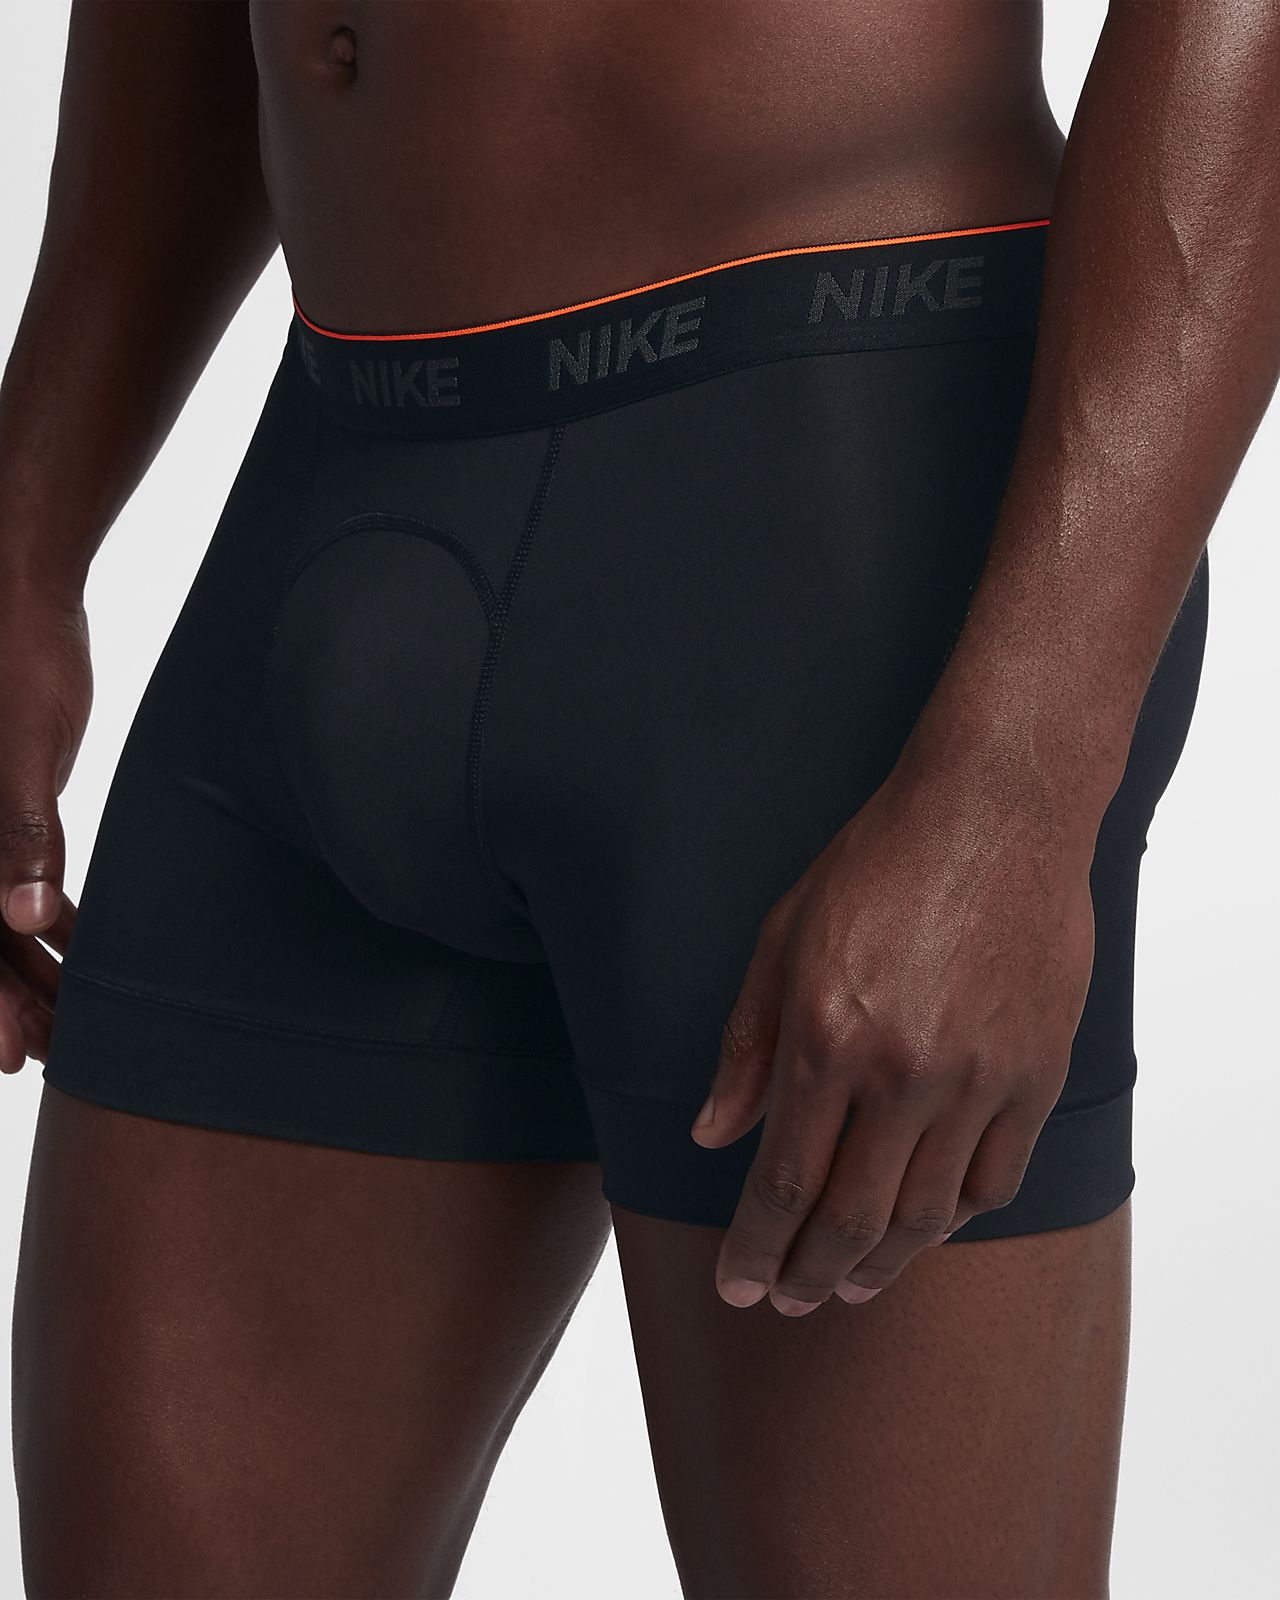 nike training underwear